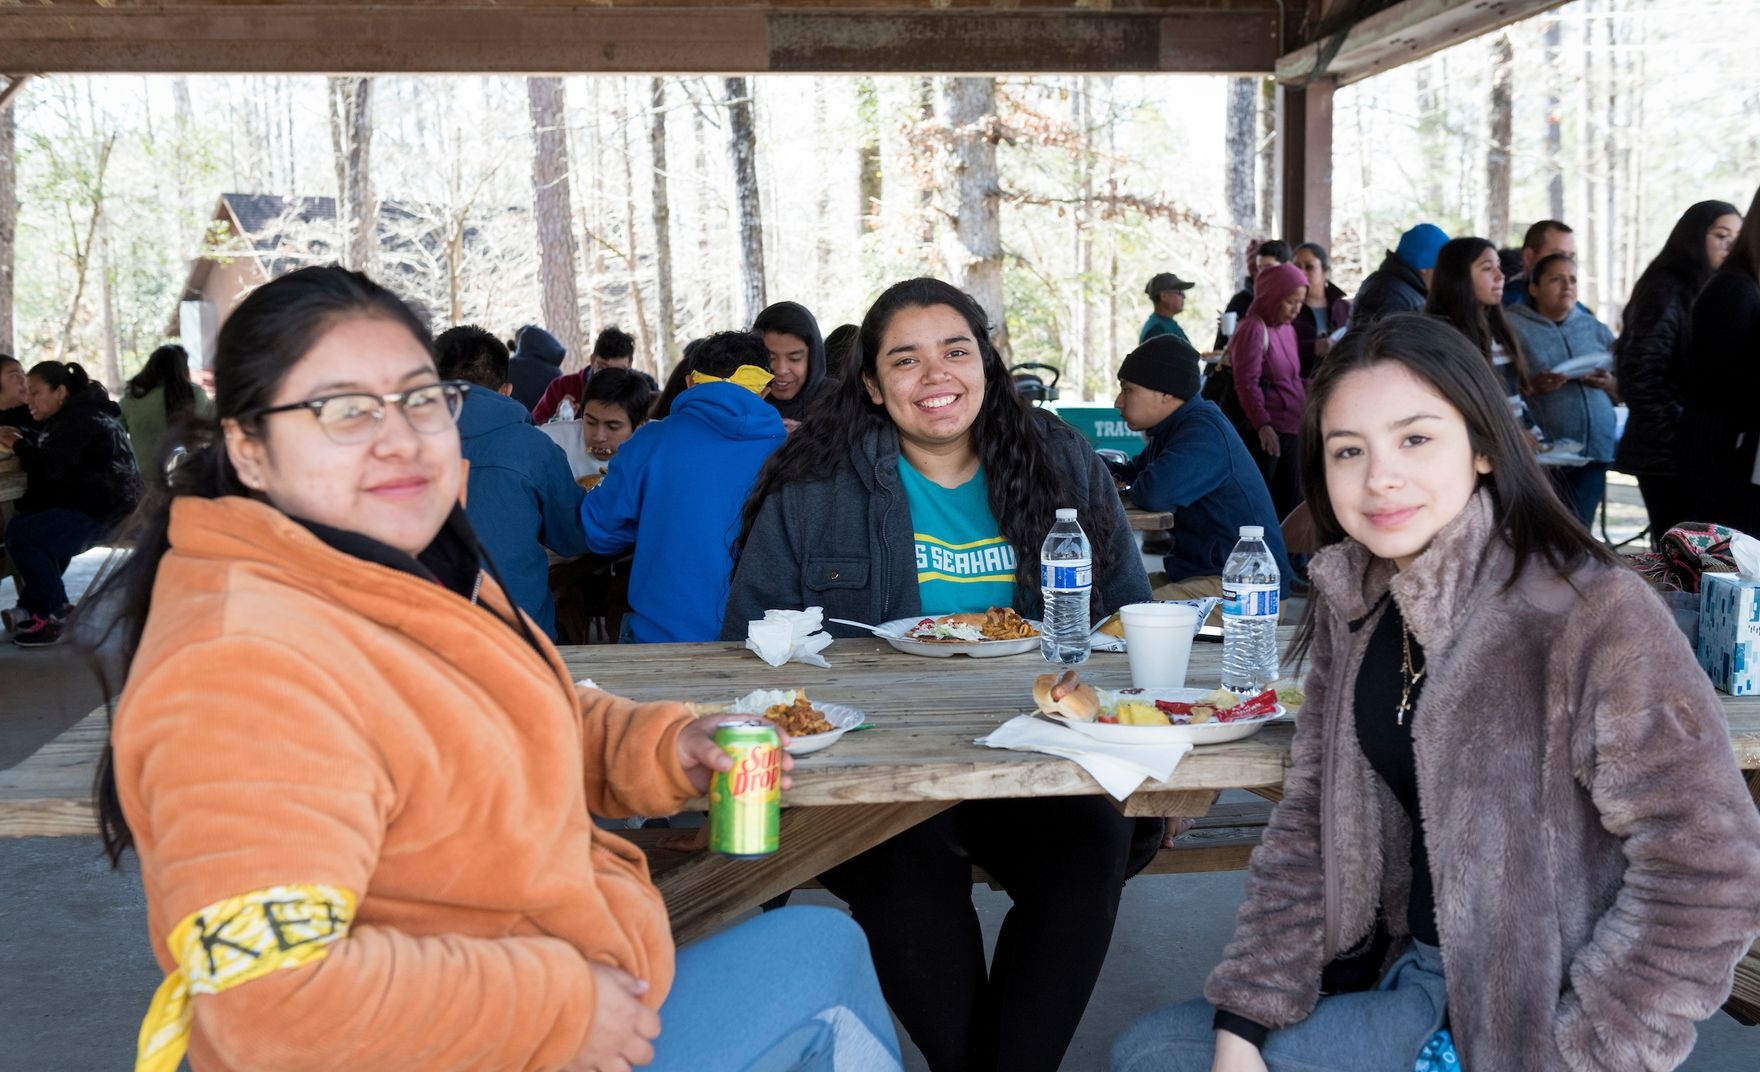 Students eating outside at camp Kirkwood